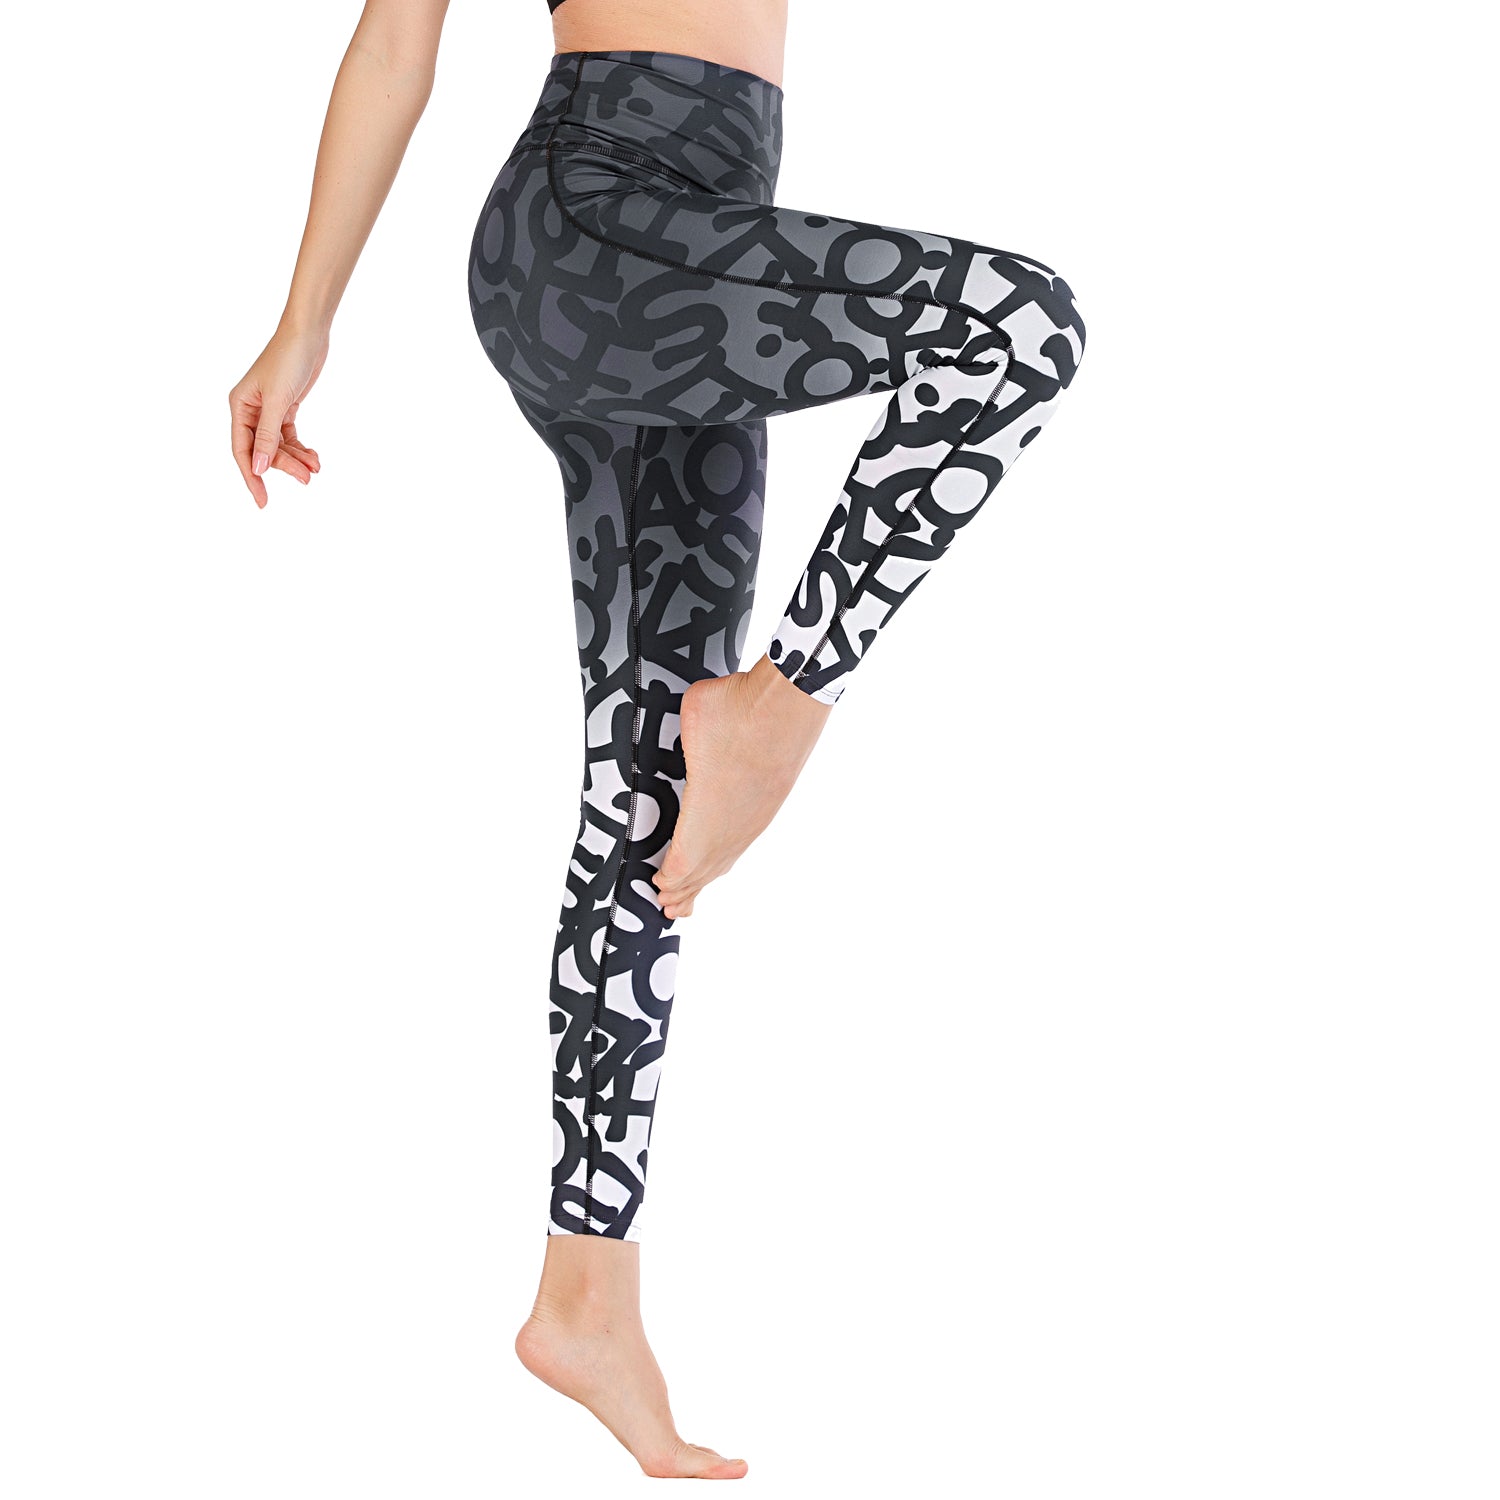 High Waisted Soft Yoga Pants Full Length Workout Leggings